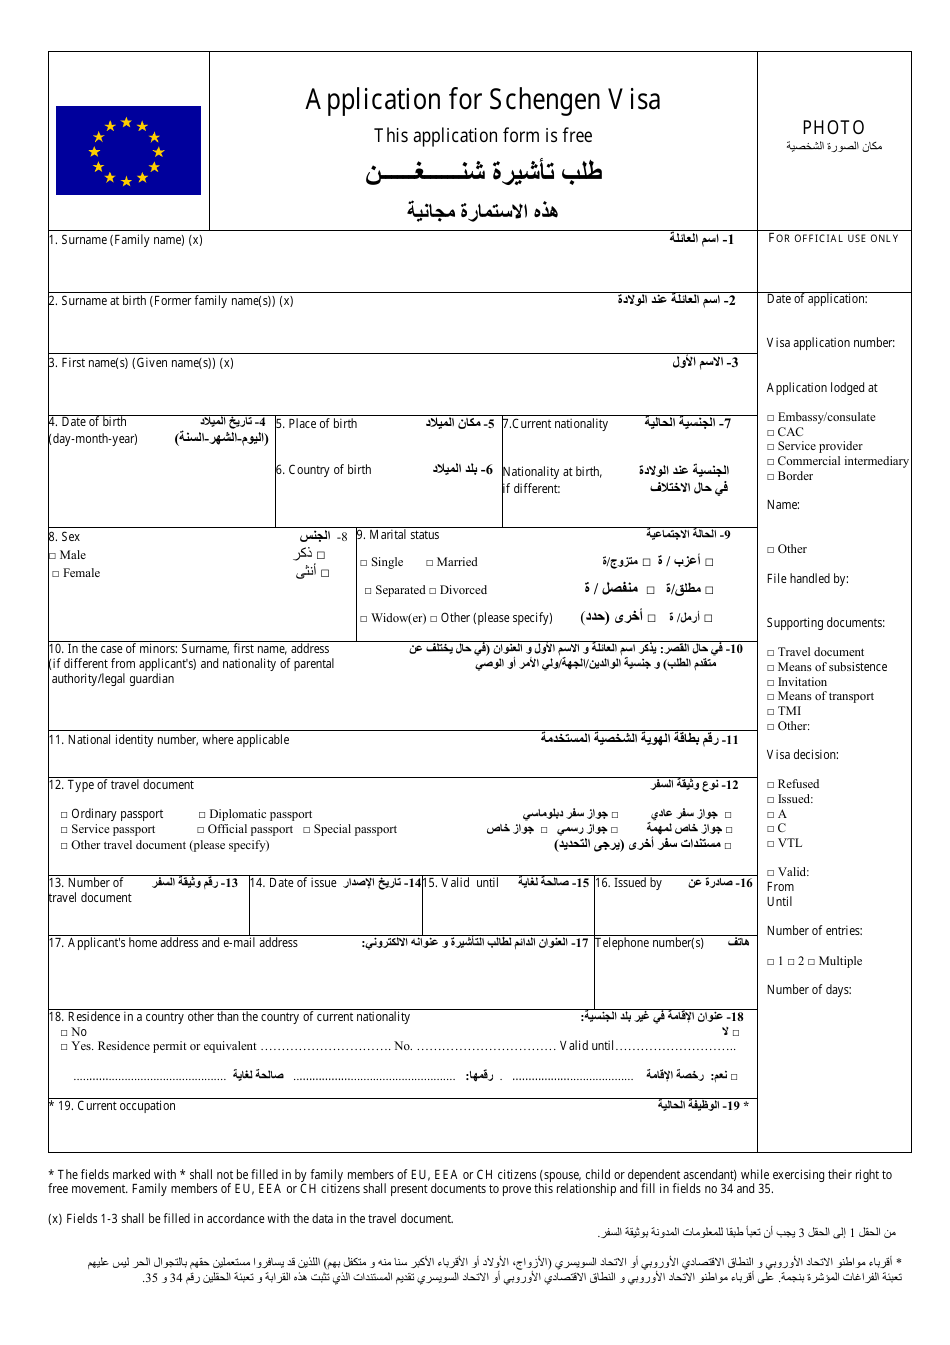 Schengen Visa Application Form (English / Arabic), Page 1